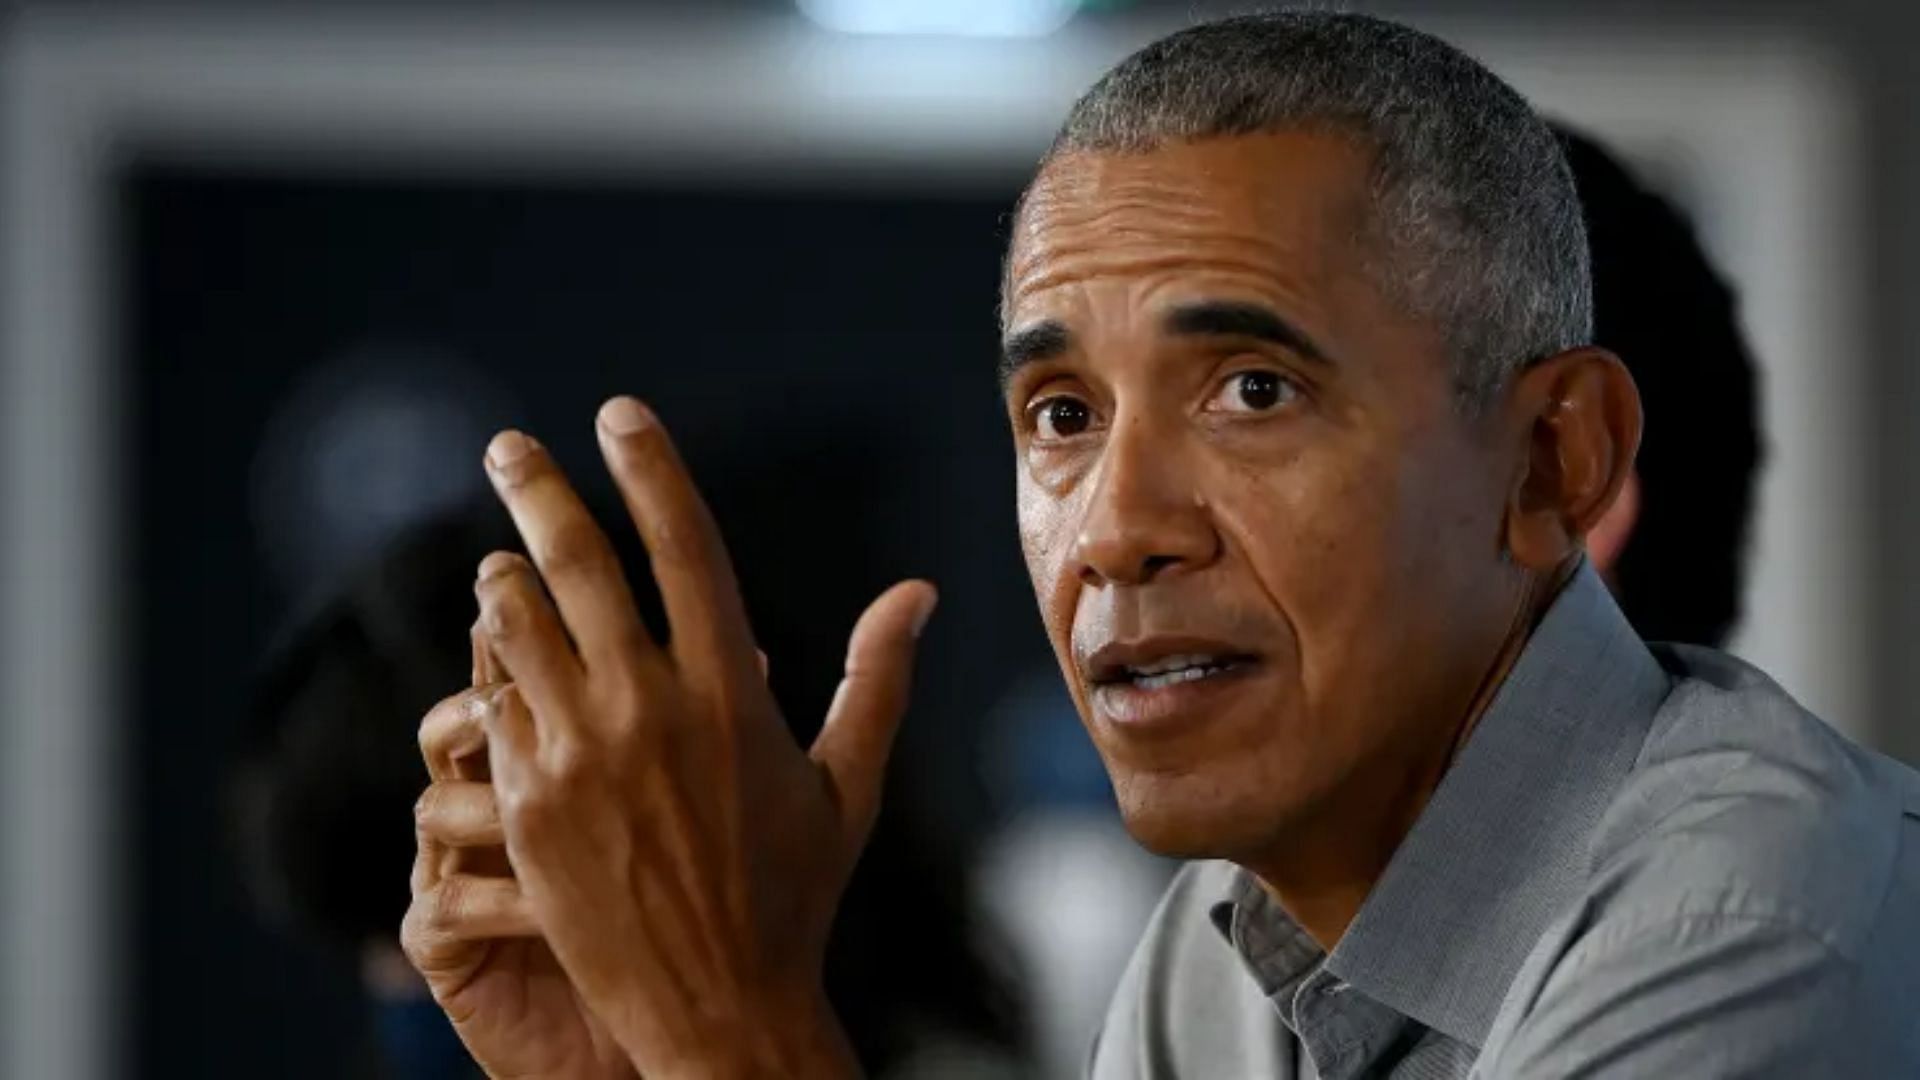 Barack Obama wins a competitive Emmy. (Image via Jeff J Mitchell/Getty Images)